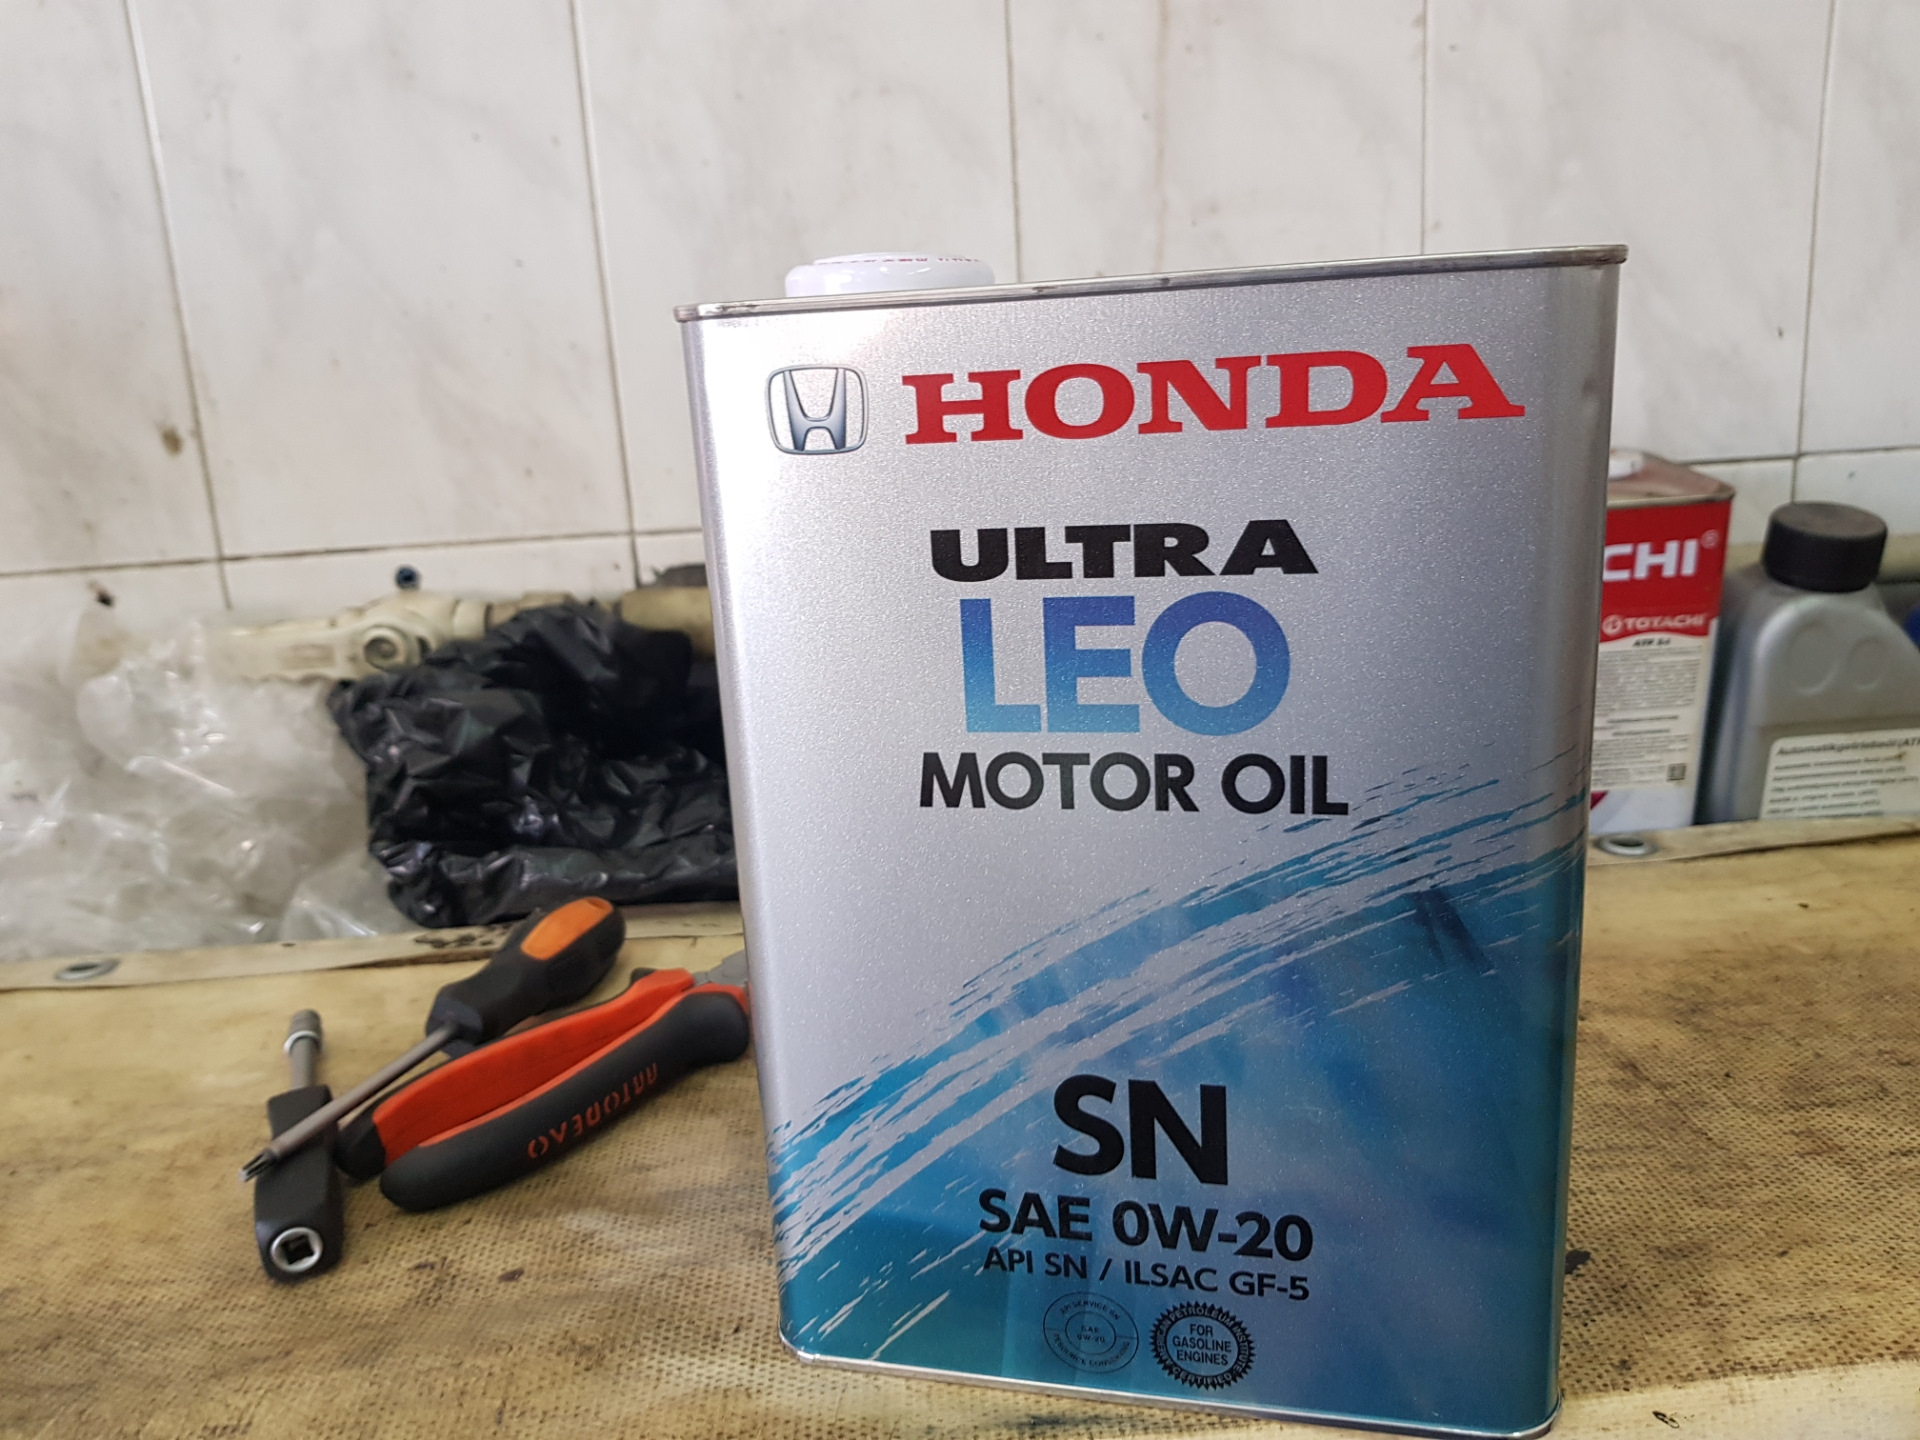 Honda Pilot масло в раздатку. Какое масло льют в Honda Civic. Масло Хонда 0 20 характеристики.